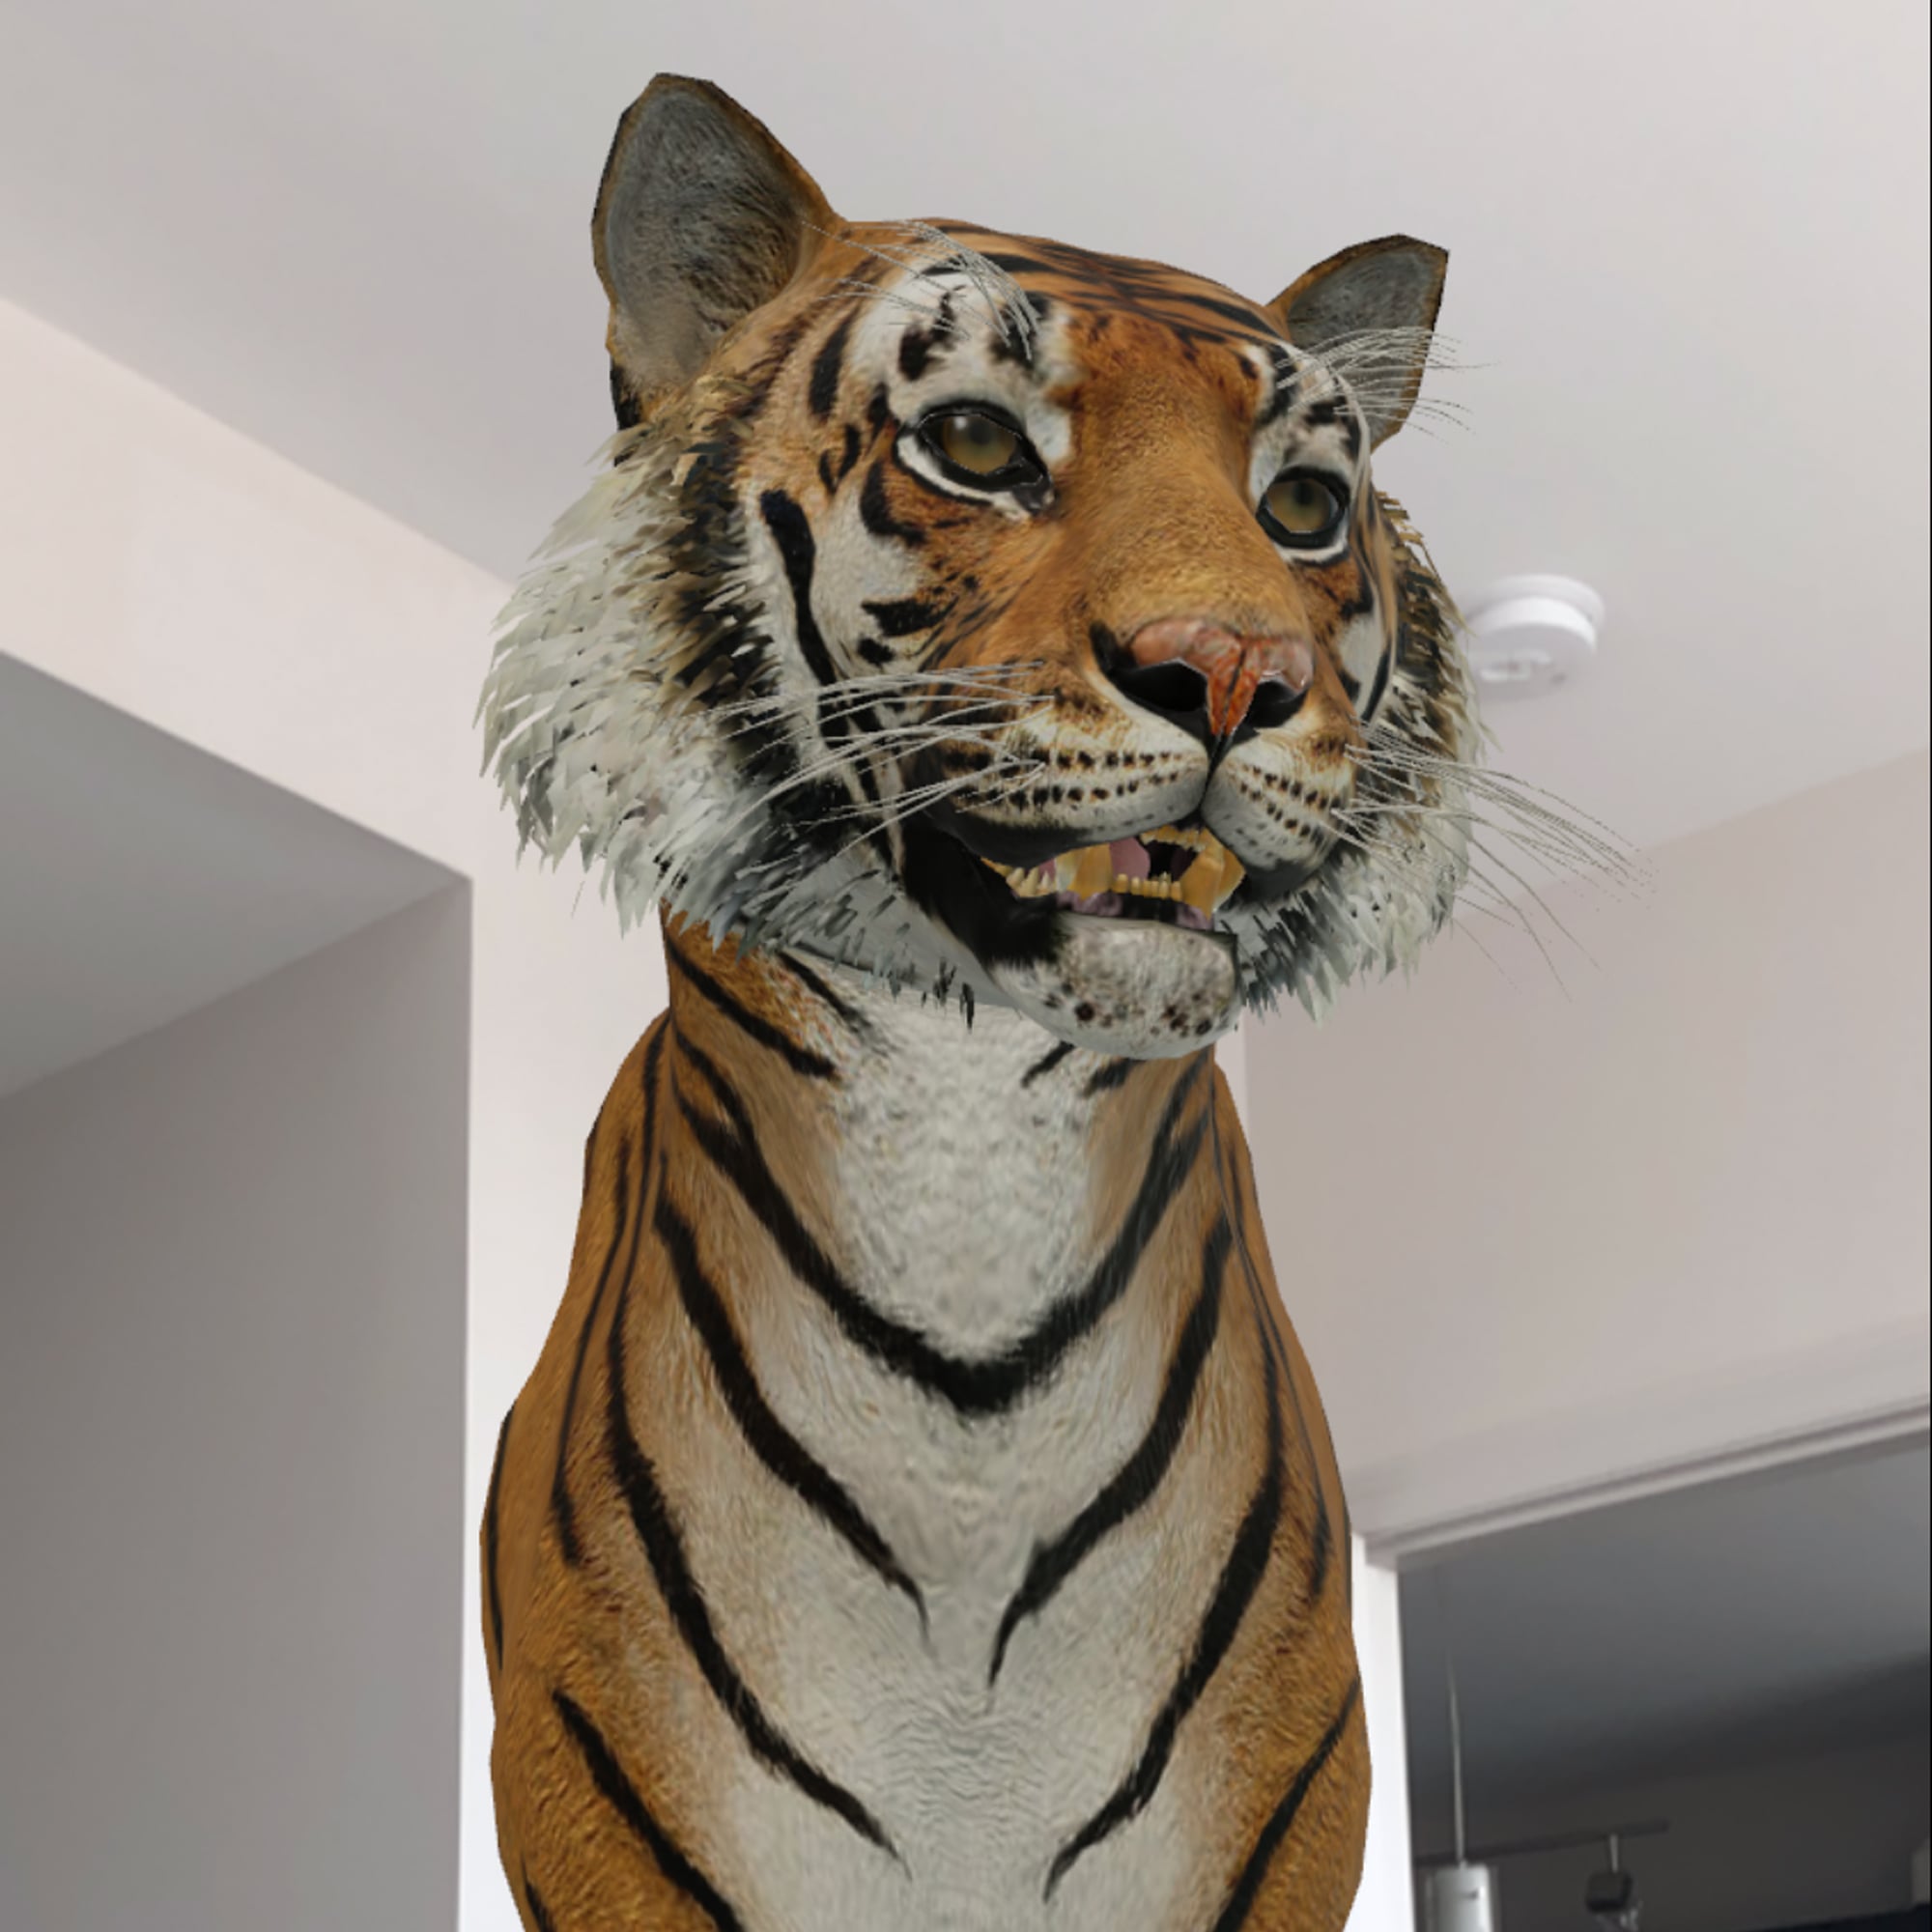 Bringing the Animal Kingdom to Life with Google 3D #Google3DAnimals #